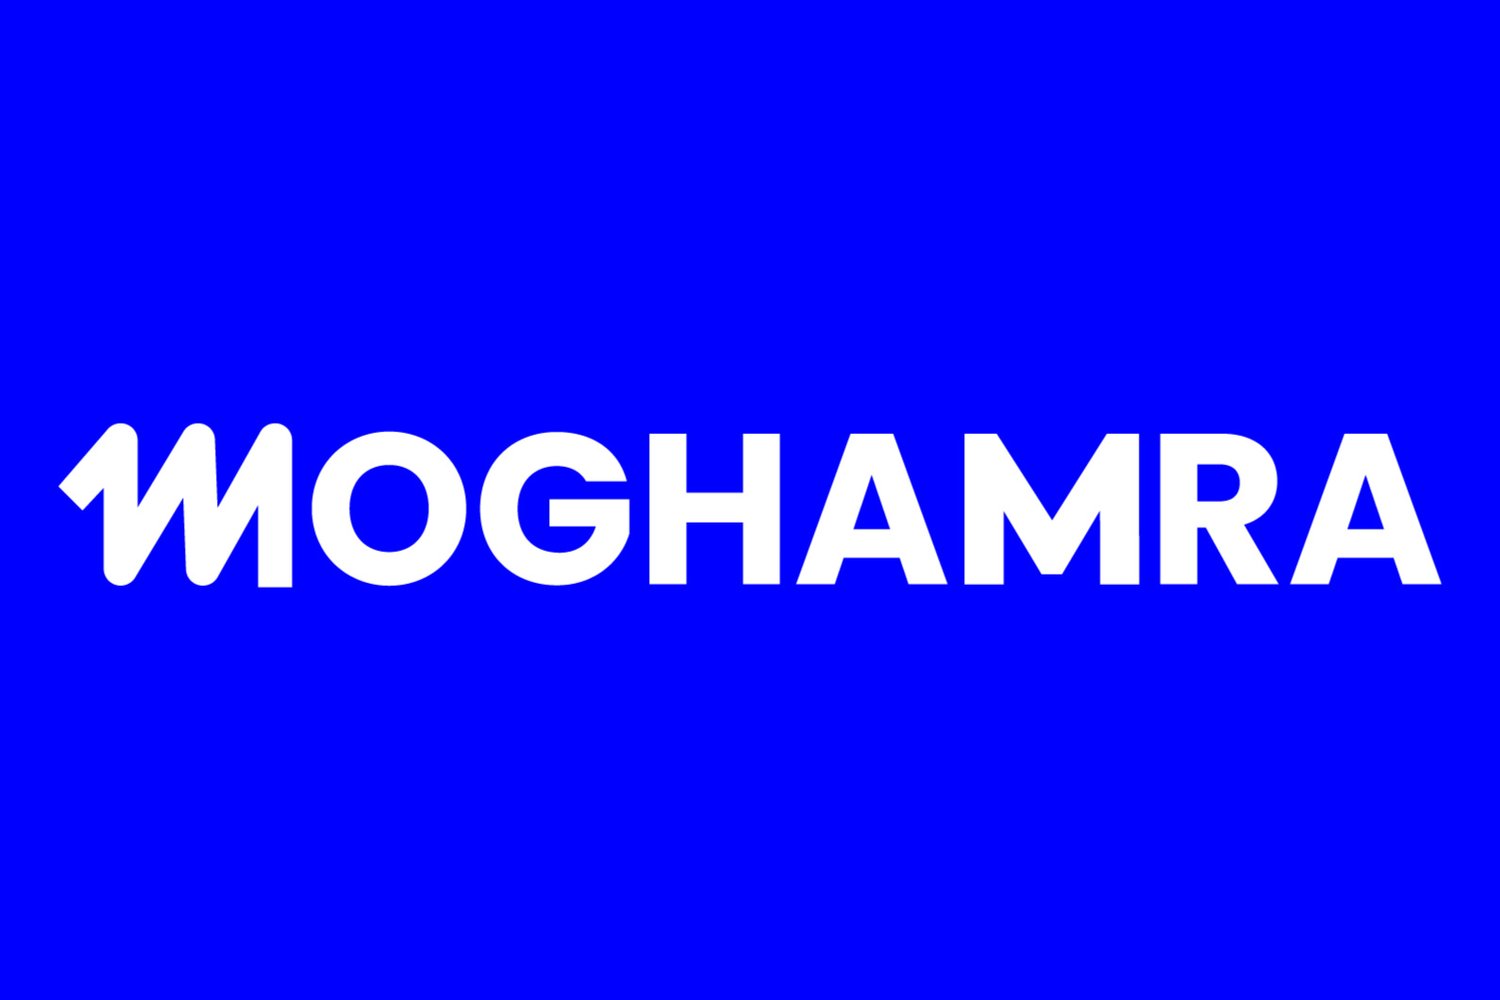 Moghamra